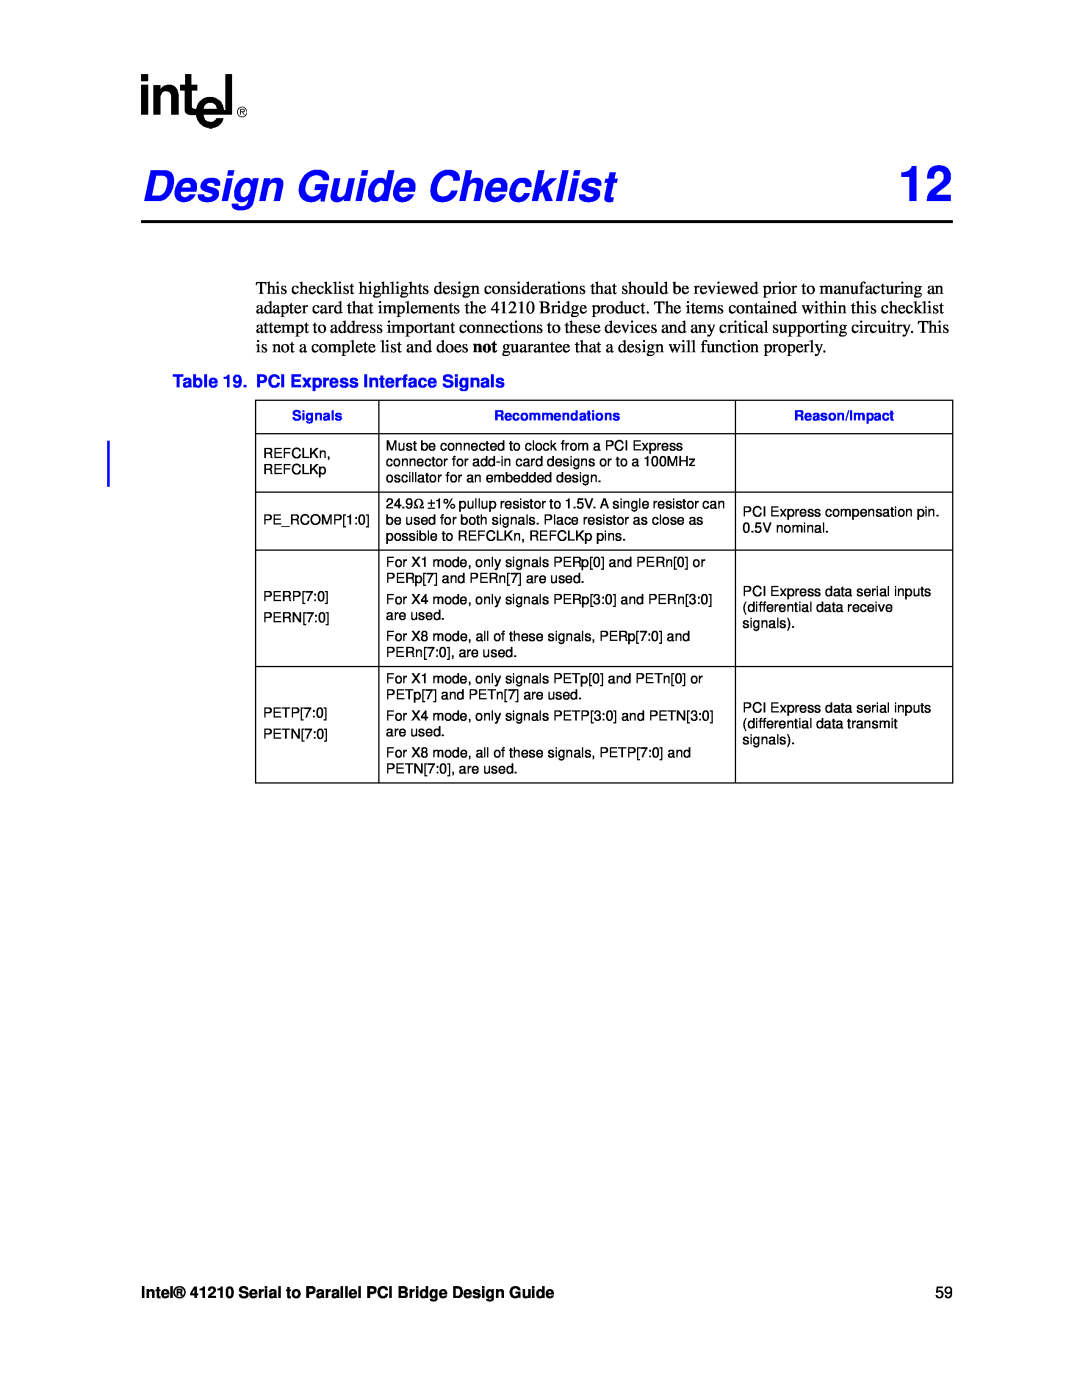 Intel Design Guide Checklist, PCI Express Interface Signals, Intel 41210 Serial to Parallel PCI Bridge Design Guide 